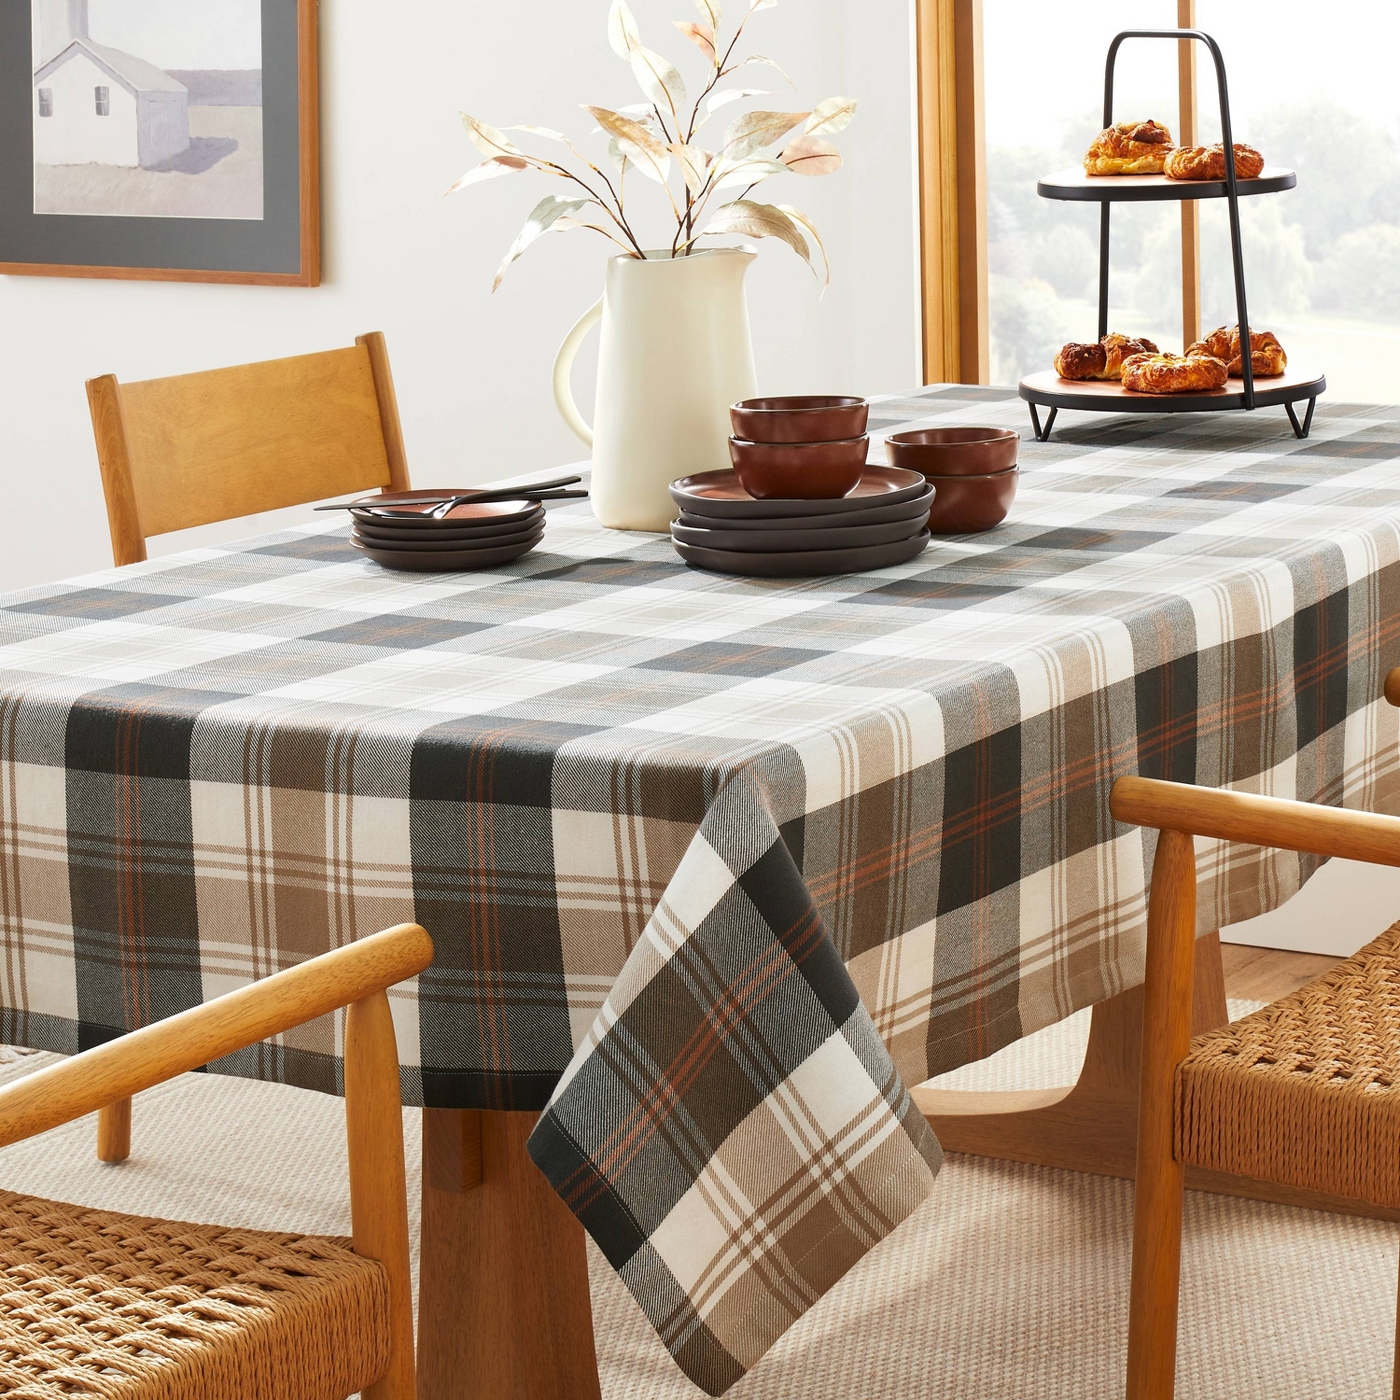 Checked Print Tablecloth Decorative Elegant Table Cloth Linen Cover 4 Colors 